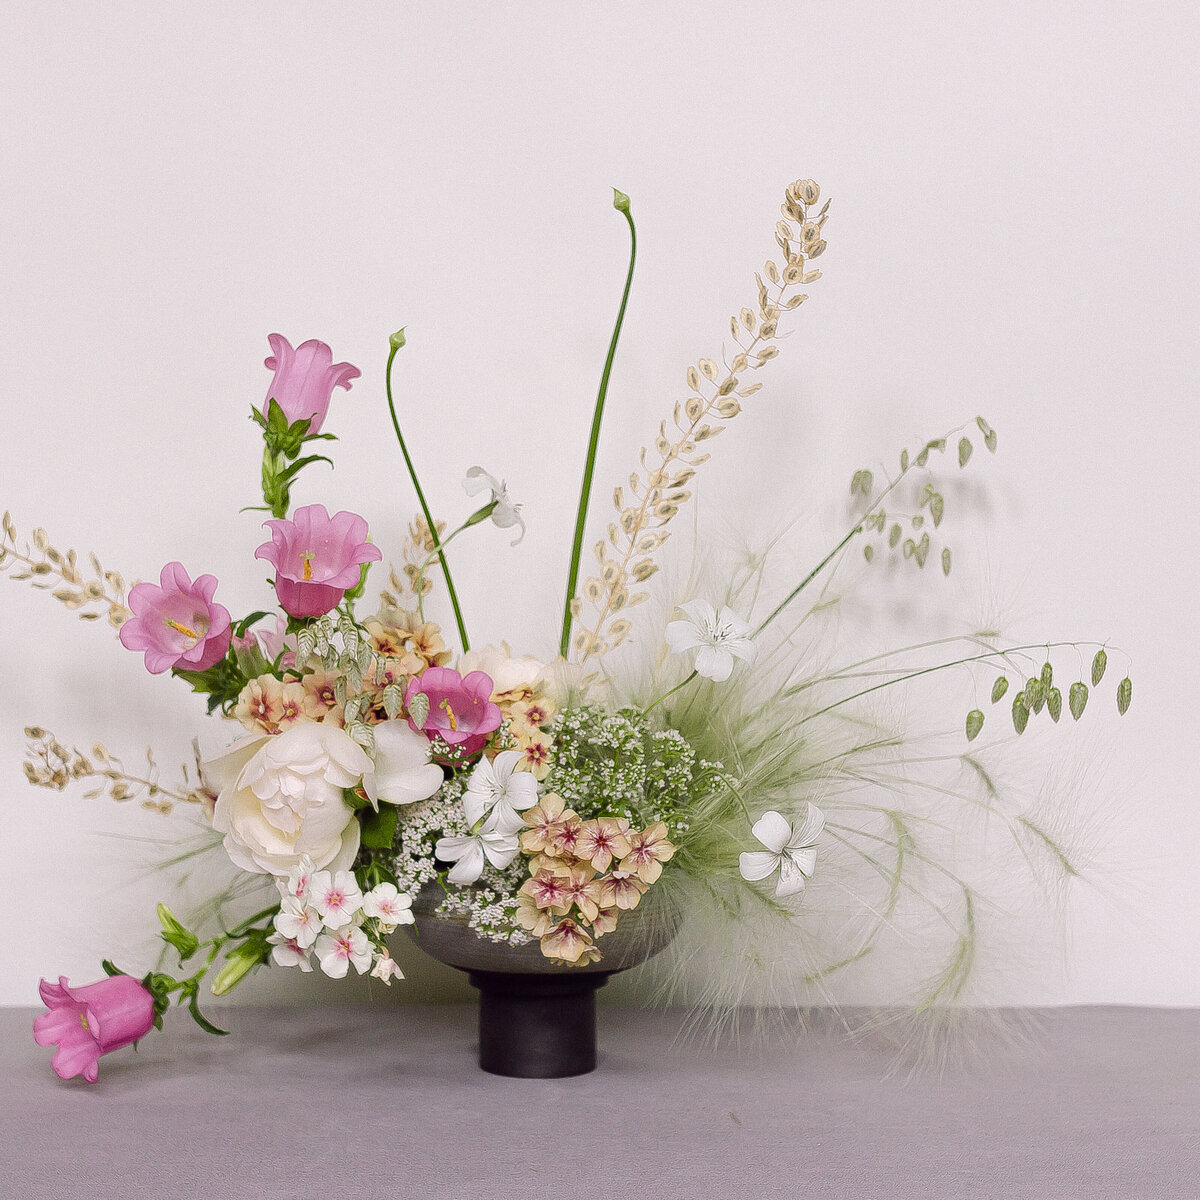 Atelier-Carmel-Wedding-Florist-GALLERY-Arrangements-29